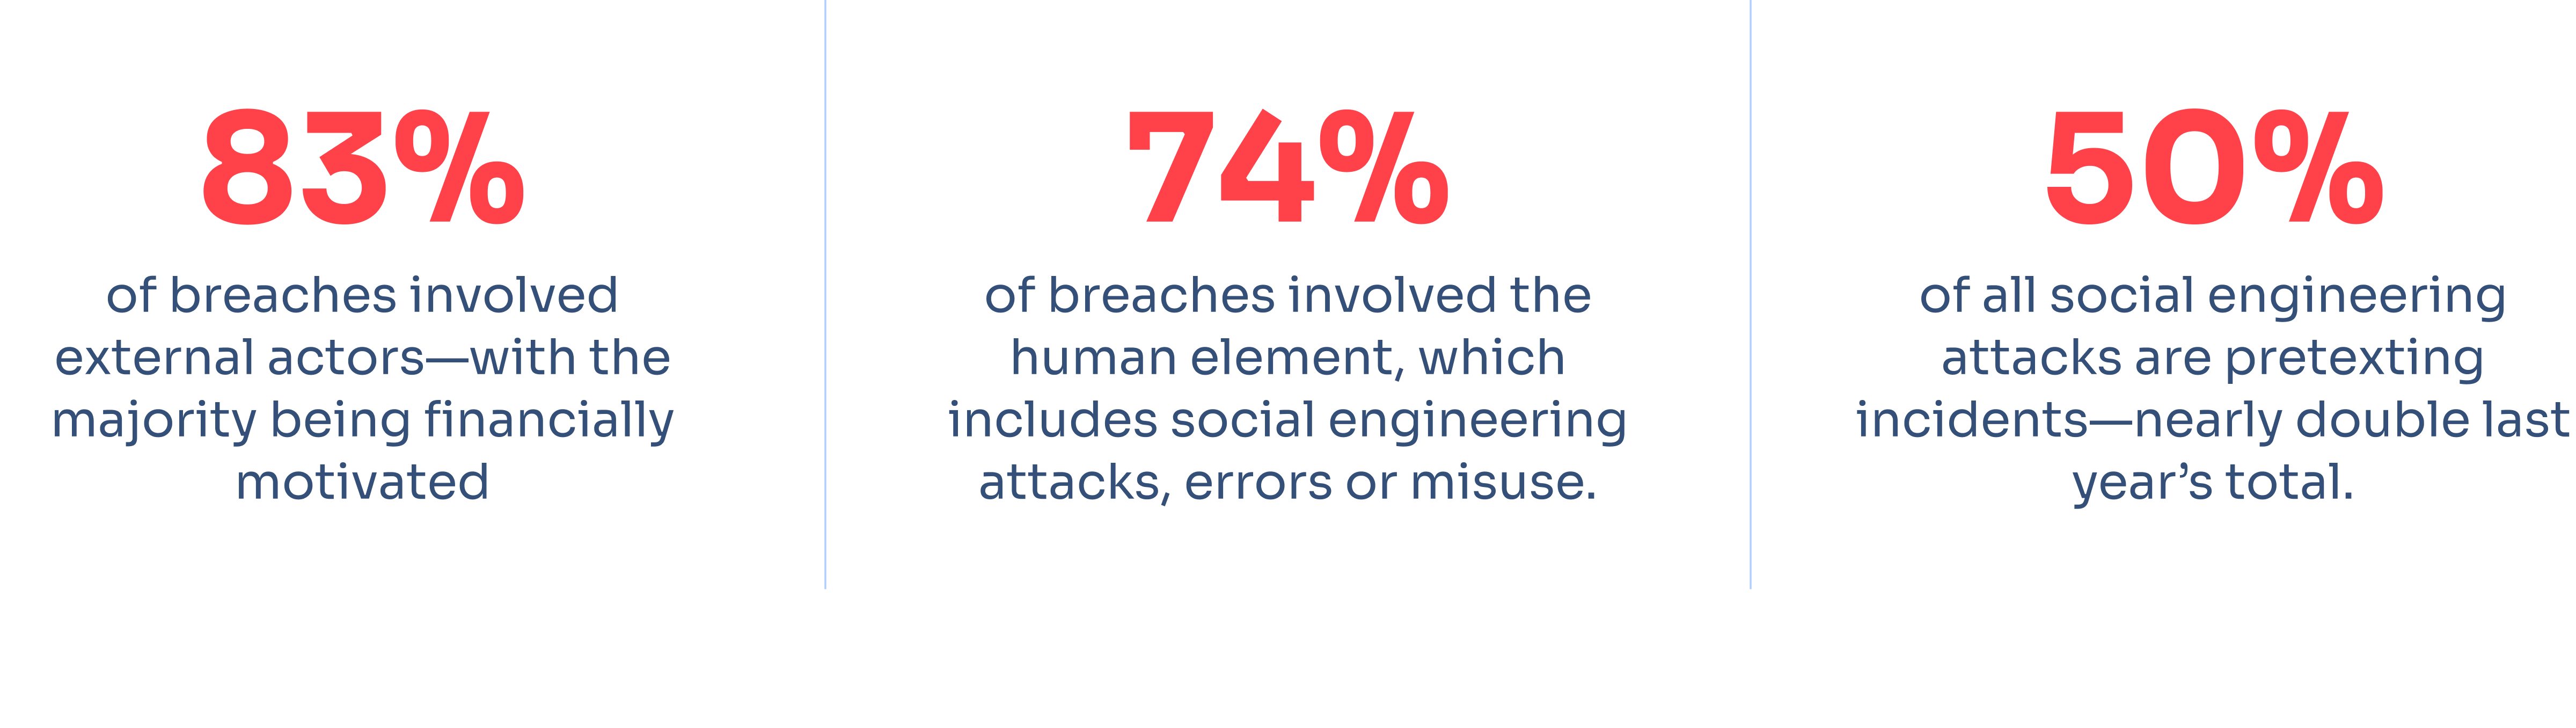 Three statistics on enterprise security breaches